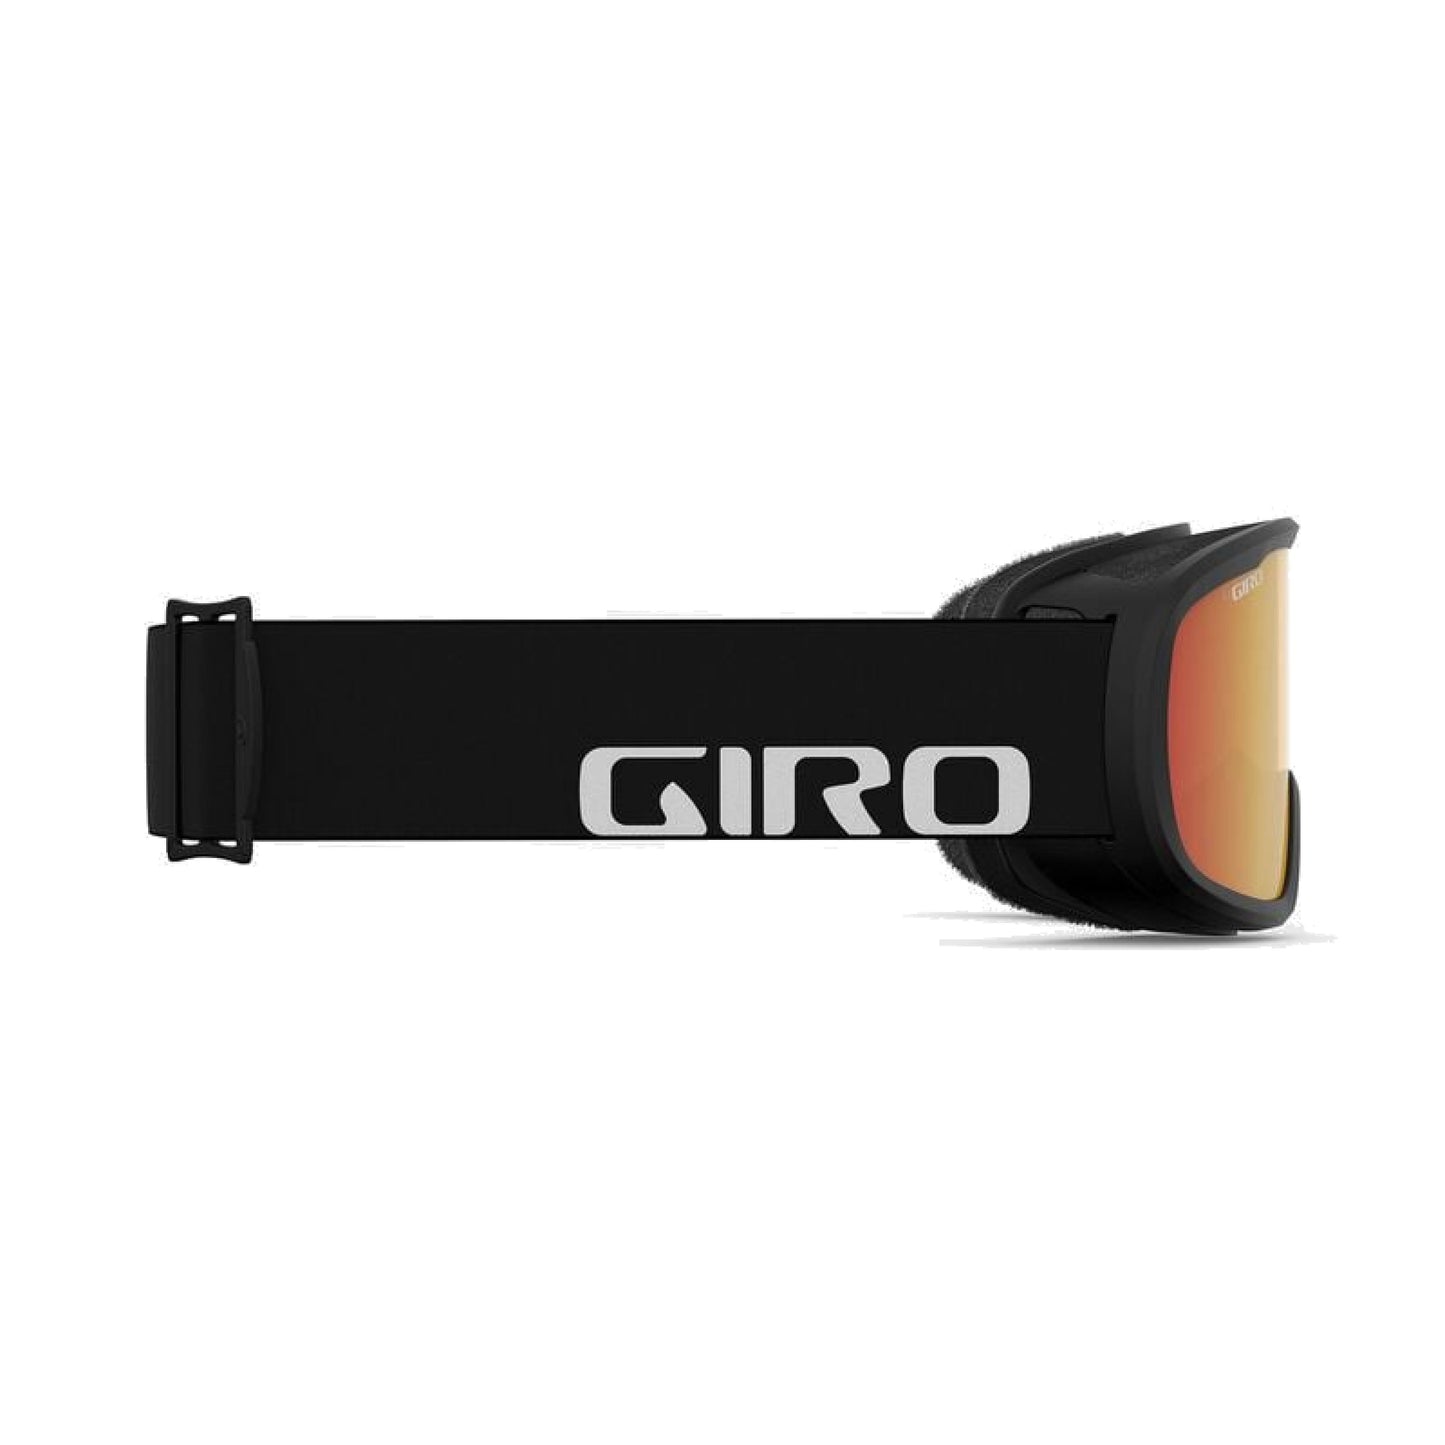 Giro Roam AF Snow Goggles Black Wordmark Amber Snow Goggles